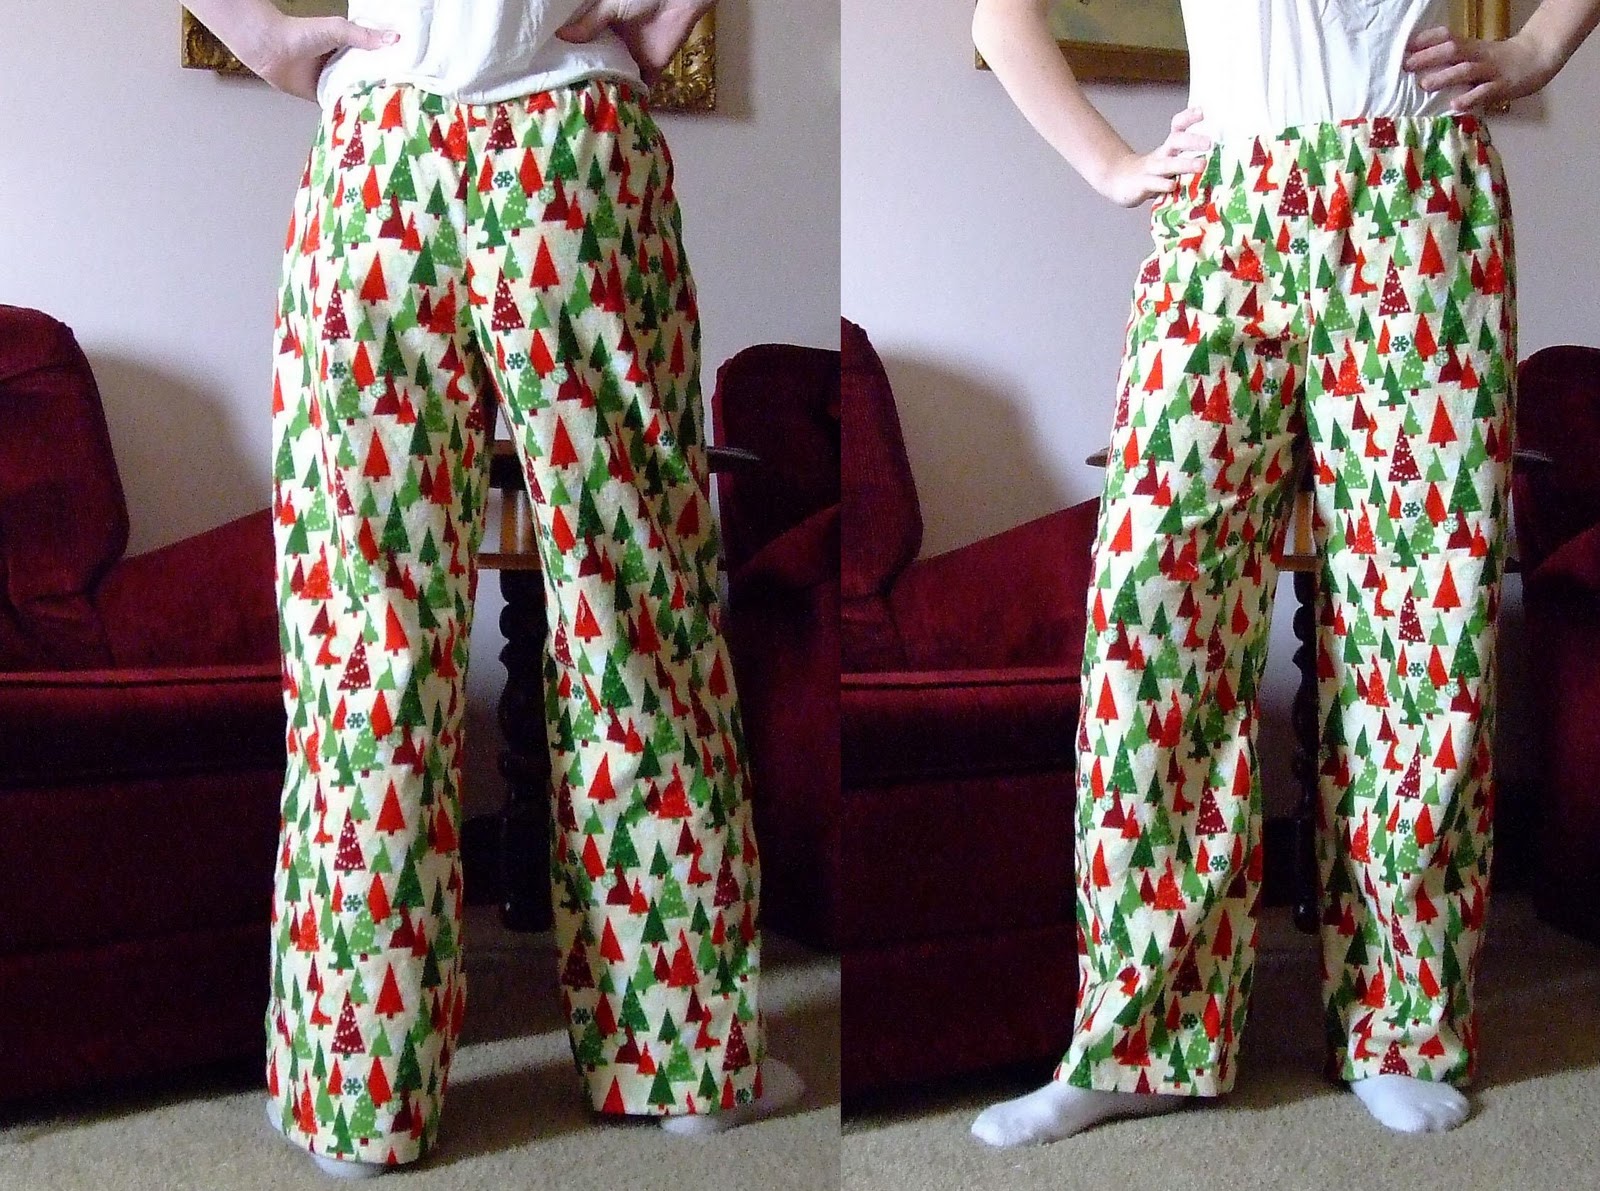 Tarapparel's Etsy Adventure: My Pajama Pants!